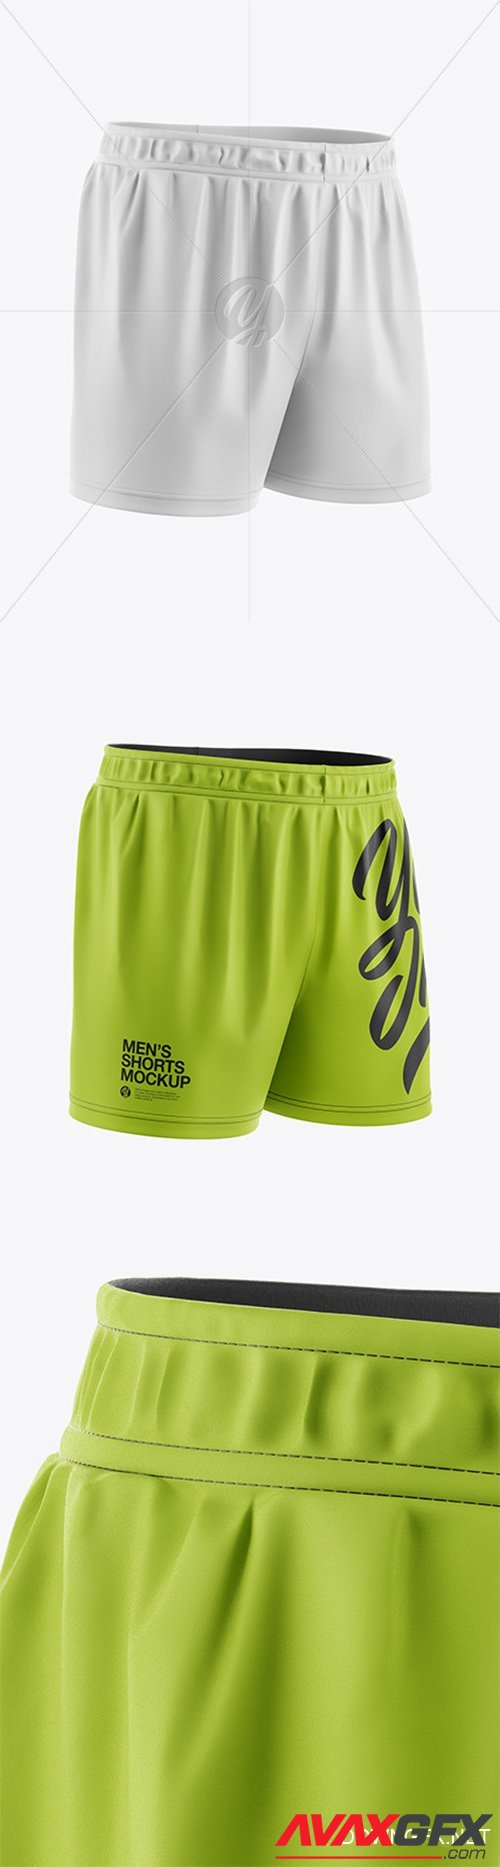 Men's Shorts Mockup 55234